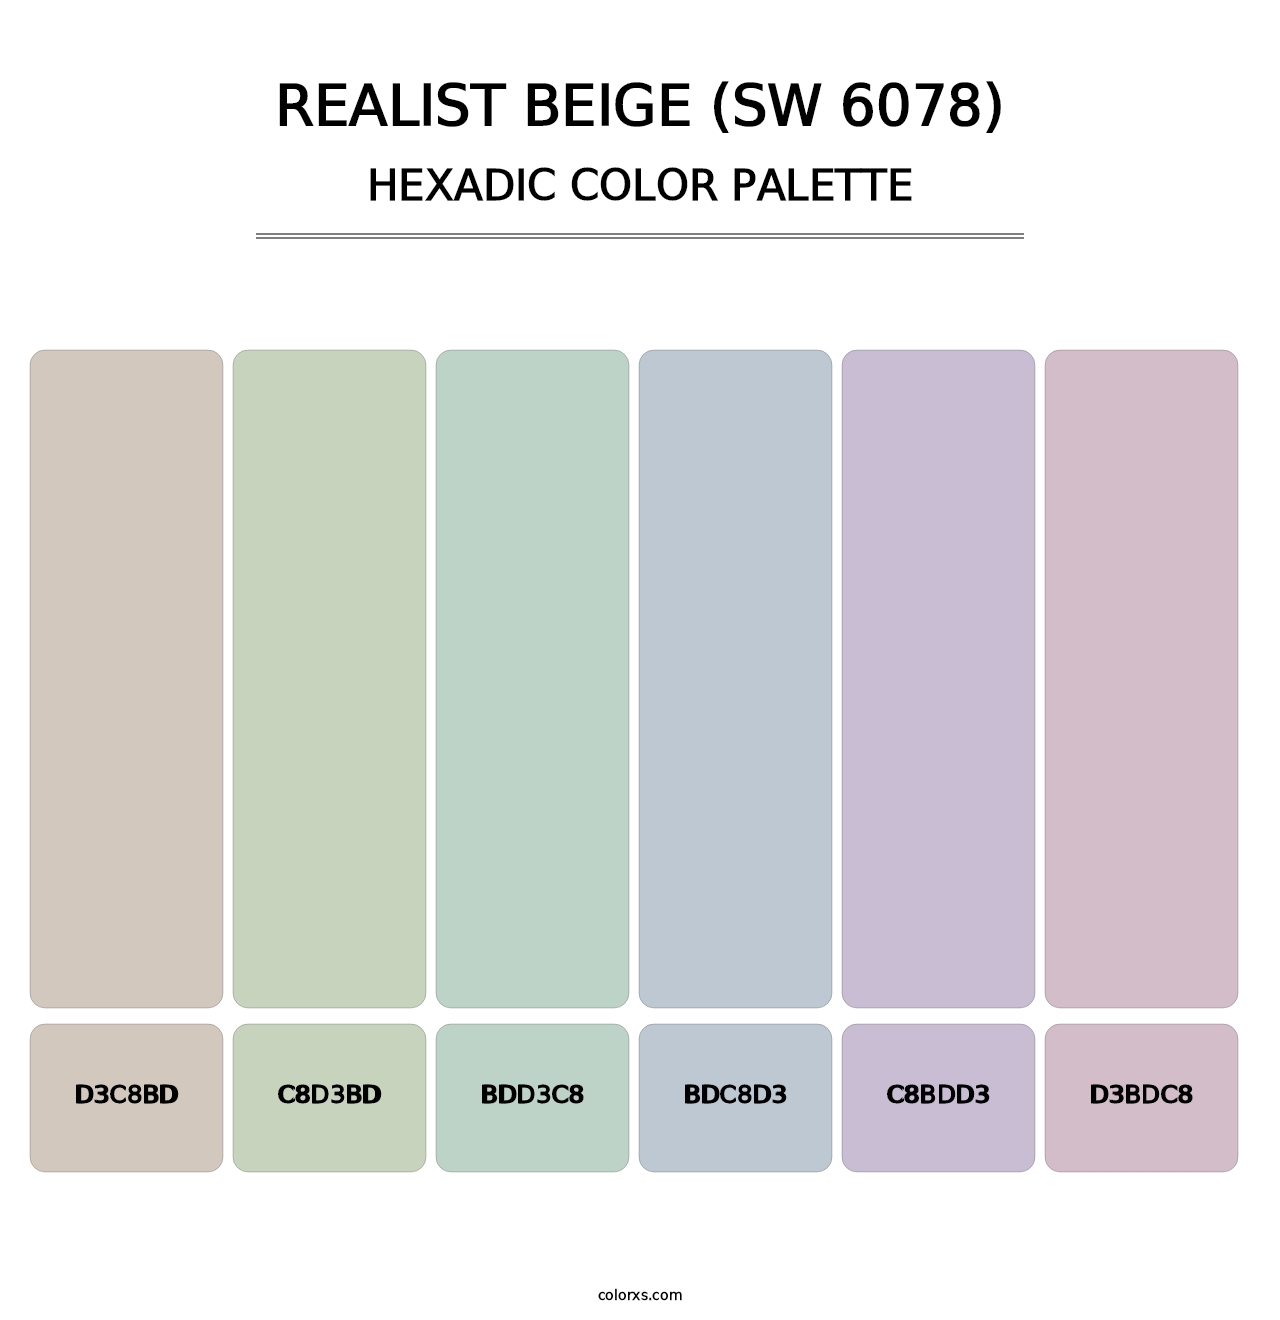 Realist Beige (SW 6078) - Hexadic Color Palette